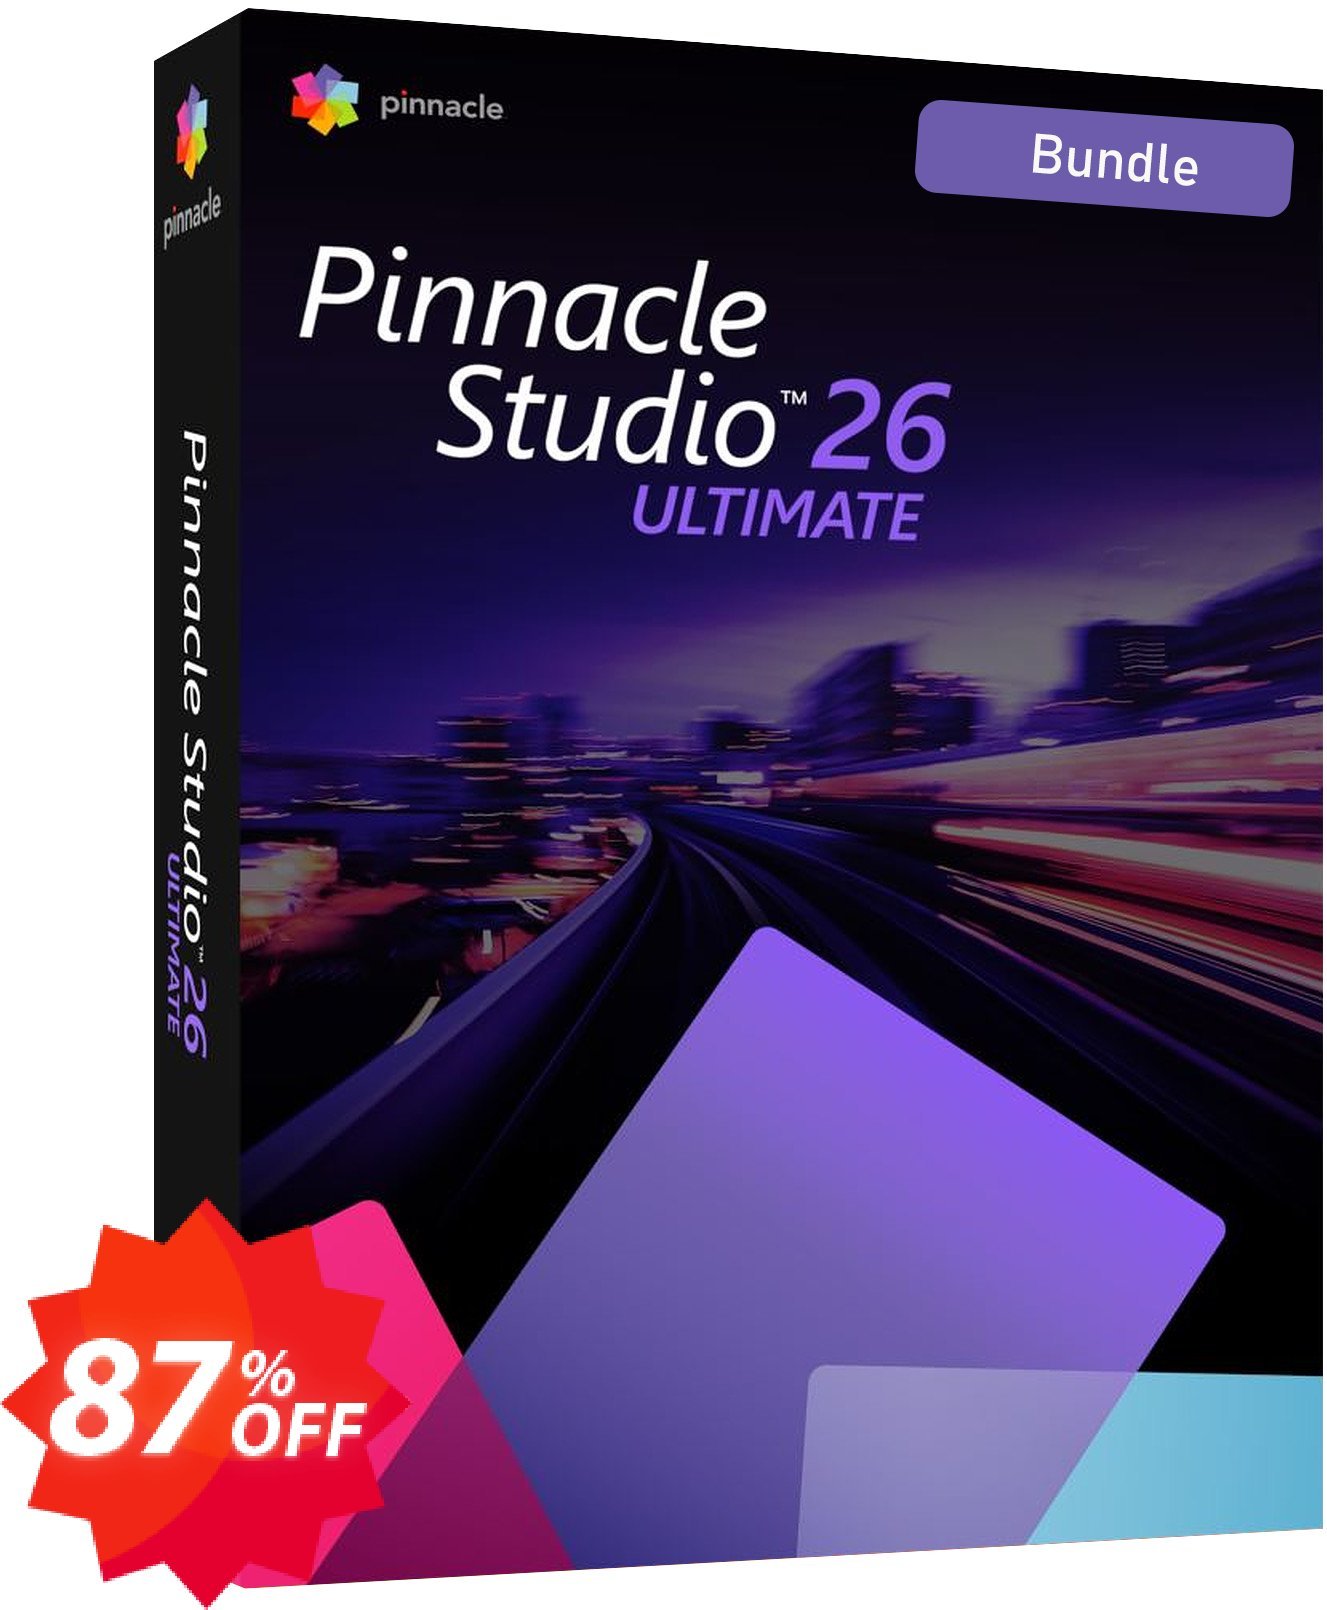 Pinnacle Studio 26 Ultimate Bundle UPGRADE Coupon code 87% discount 